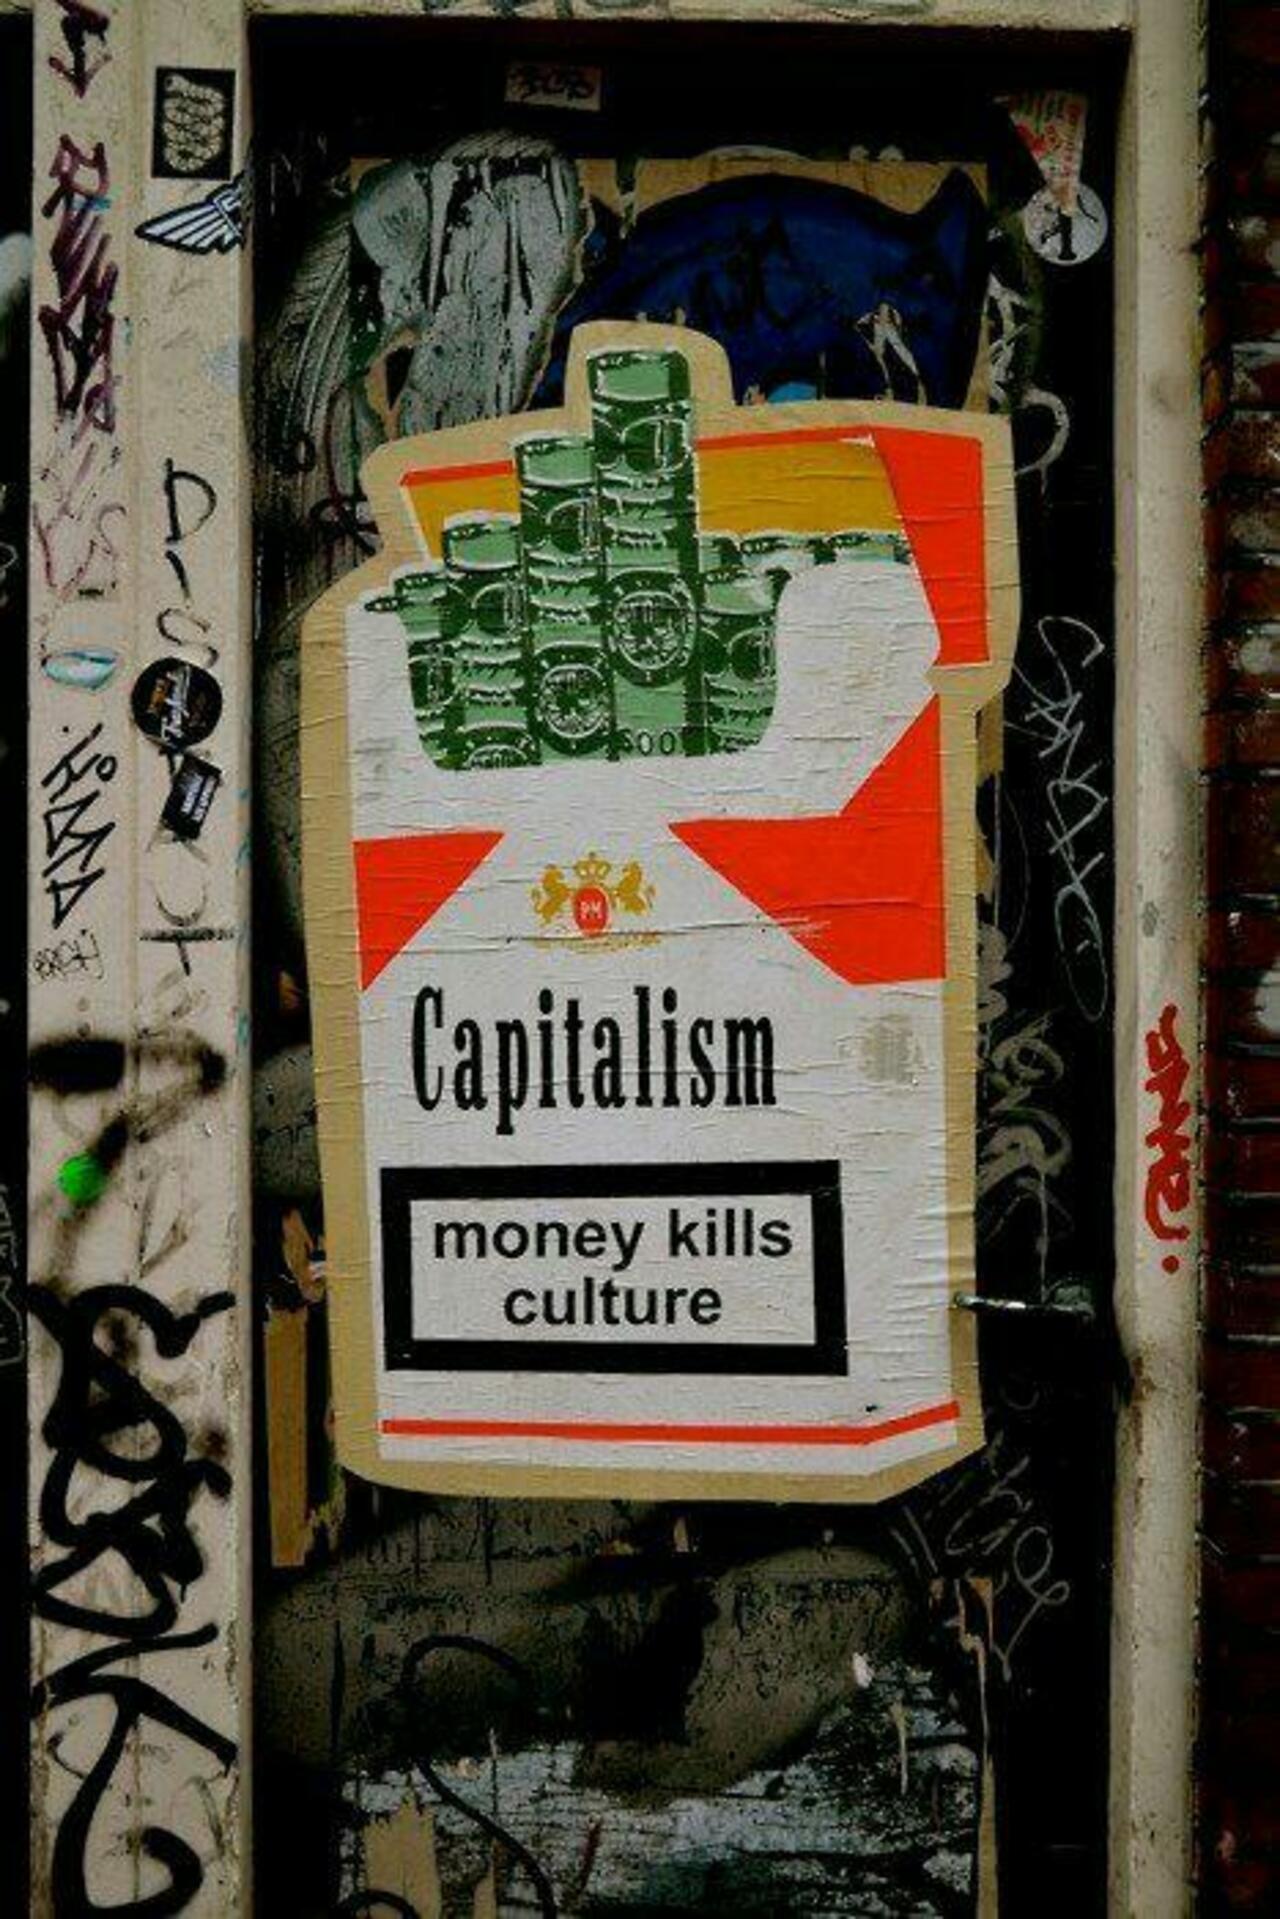 RT @hypatia373: #art #streetart #graffiti http://t.co/5lpzHM9Lvc